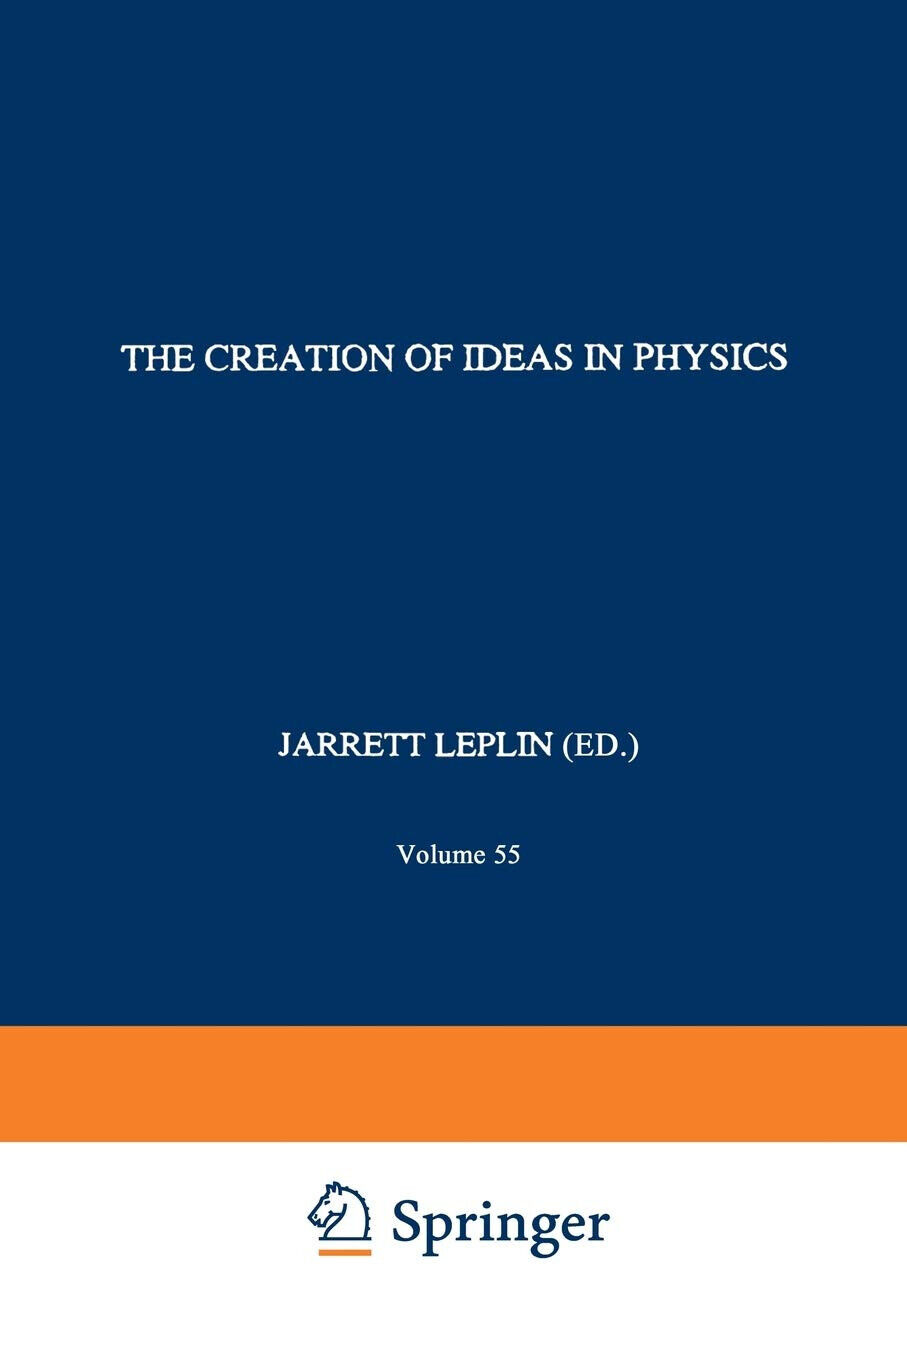 The Creation of Ideas in Physics - J. Leplin - Springer, 2010